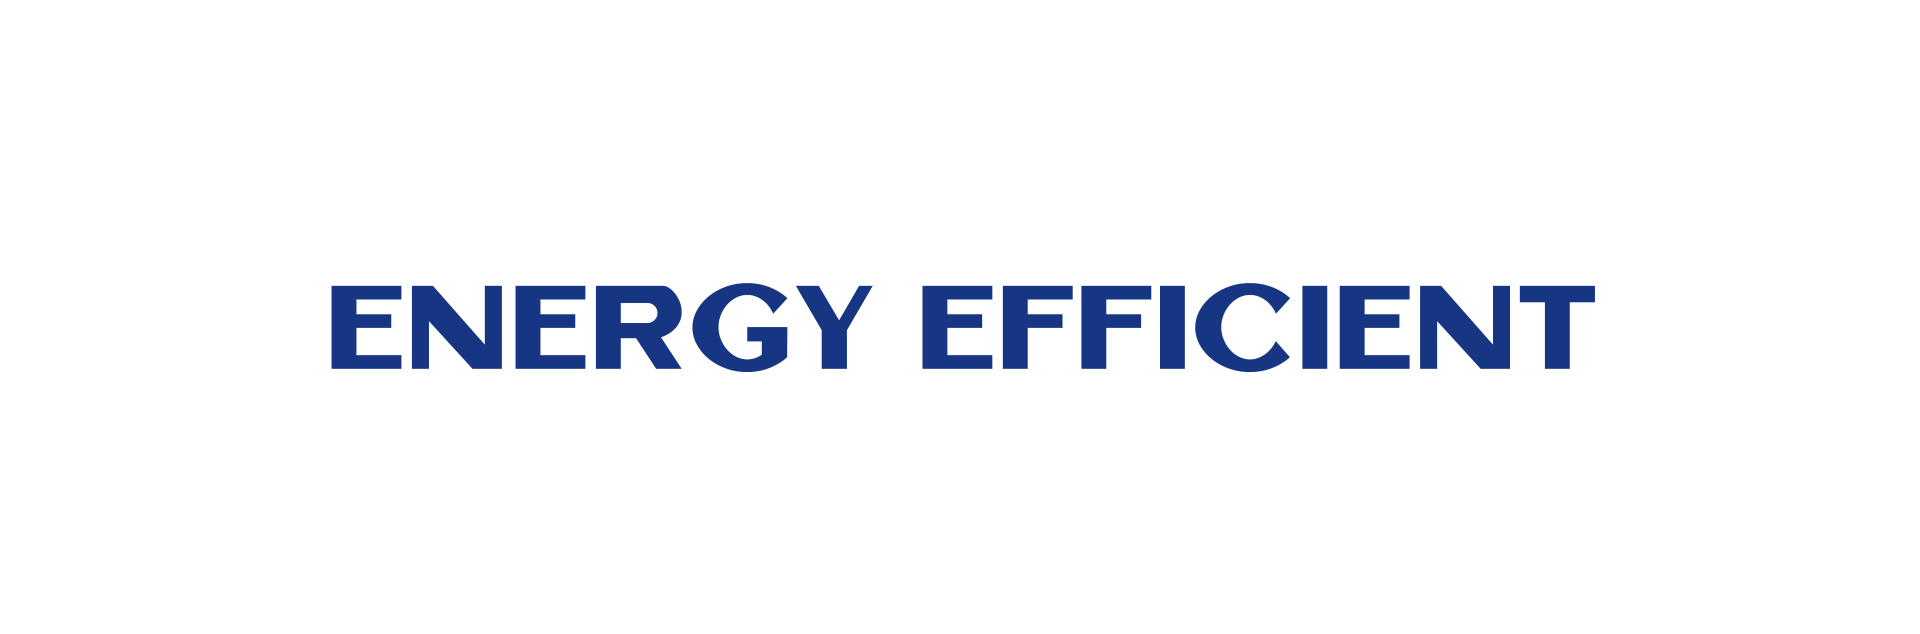 Energy Efficient Text - 2